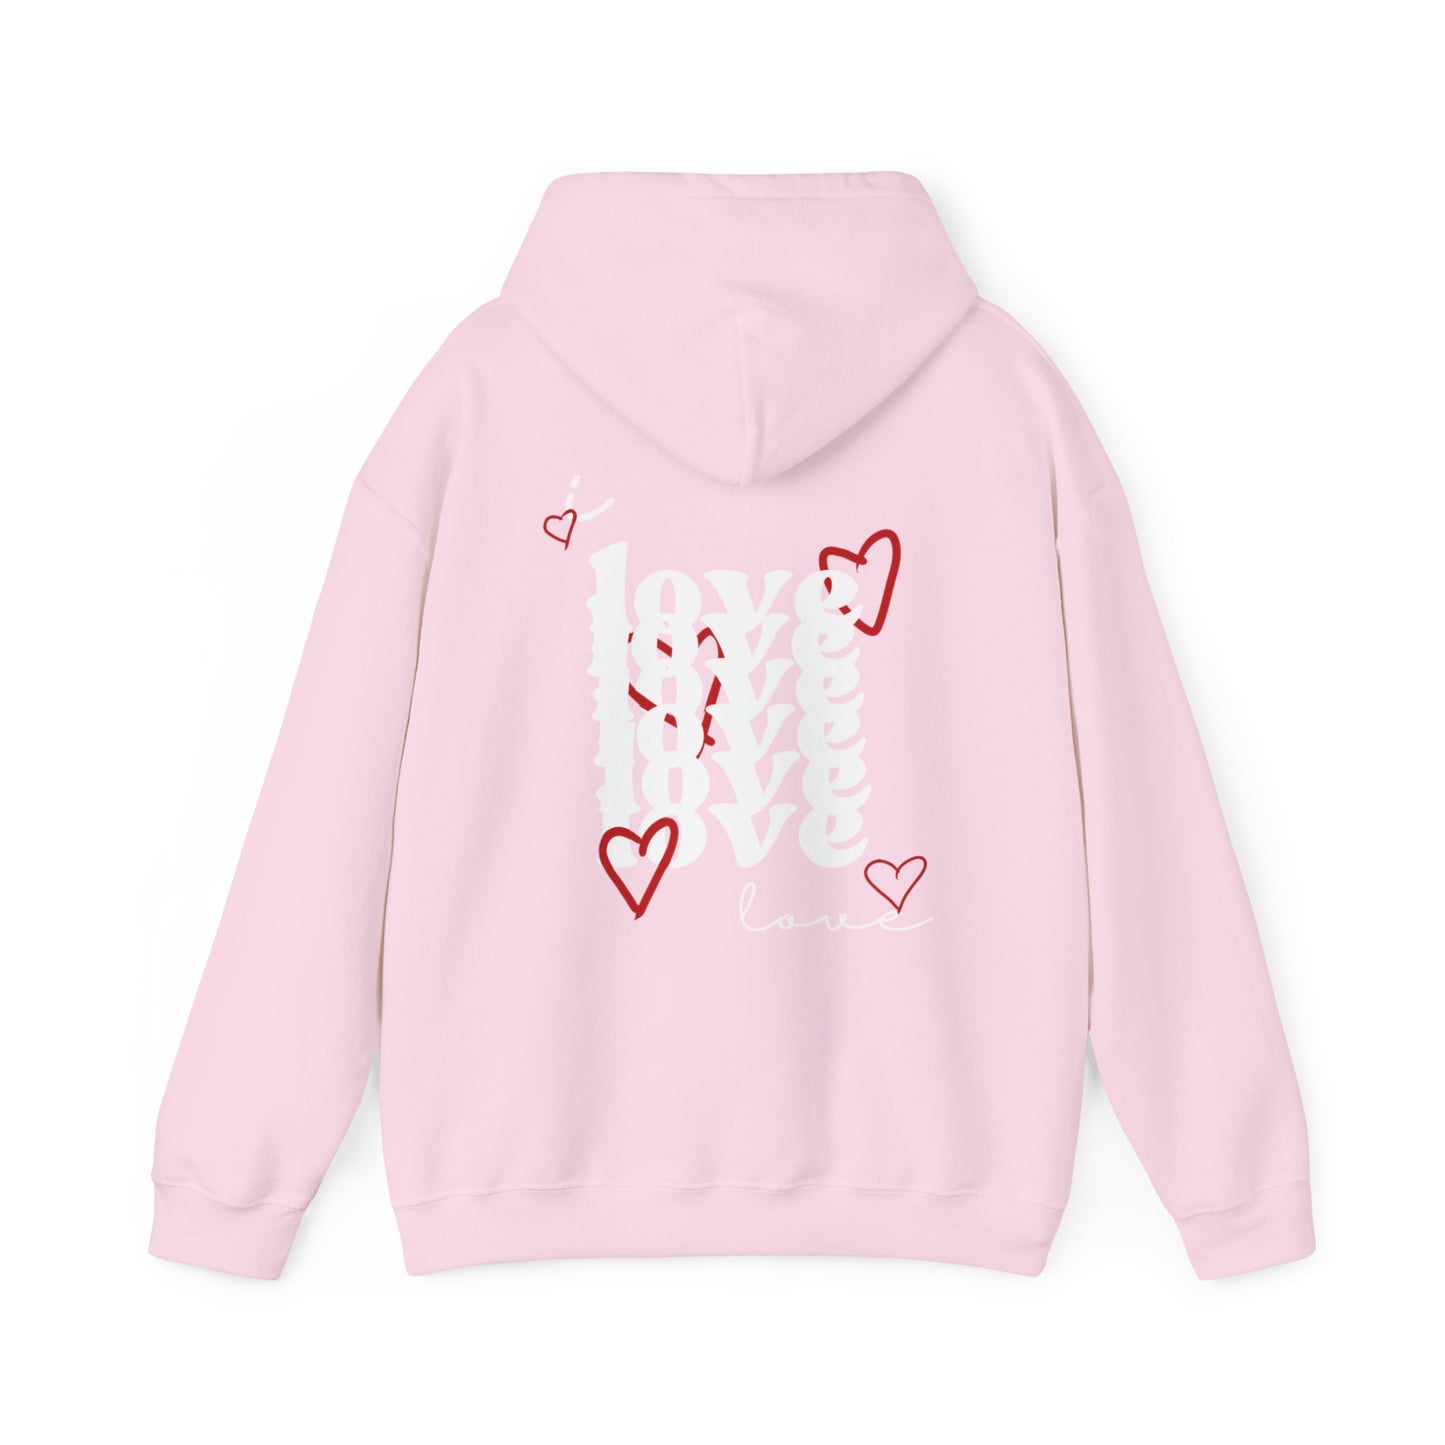 Hopeless Romantic Hooded Sweatshirt